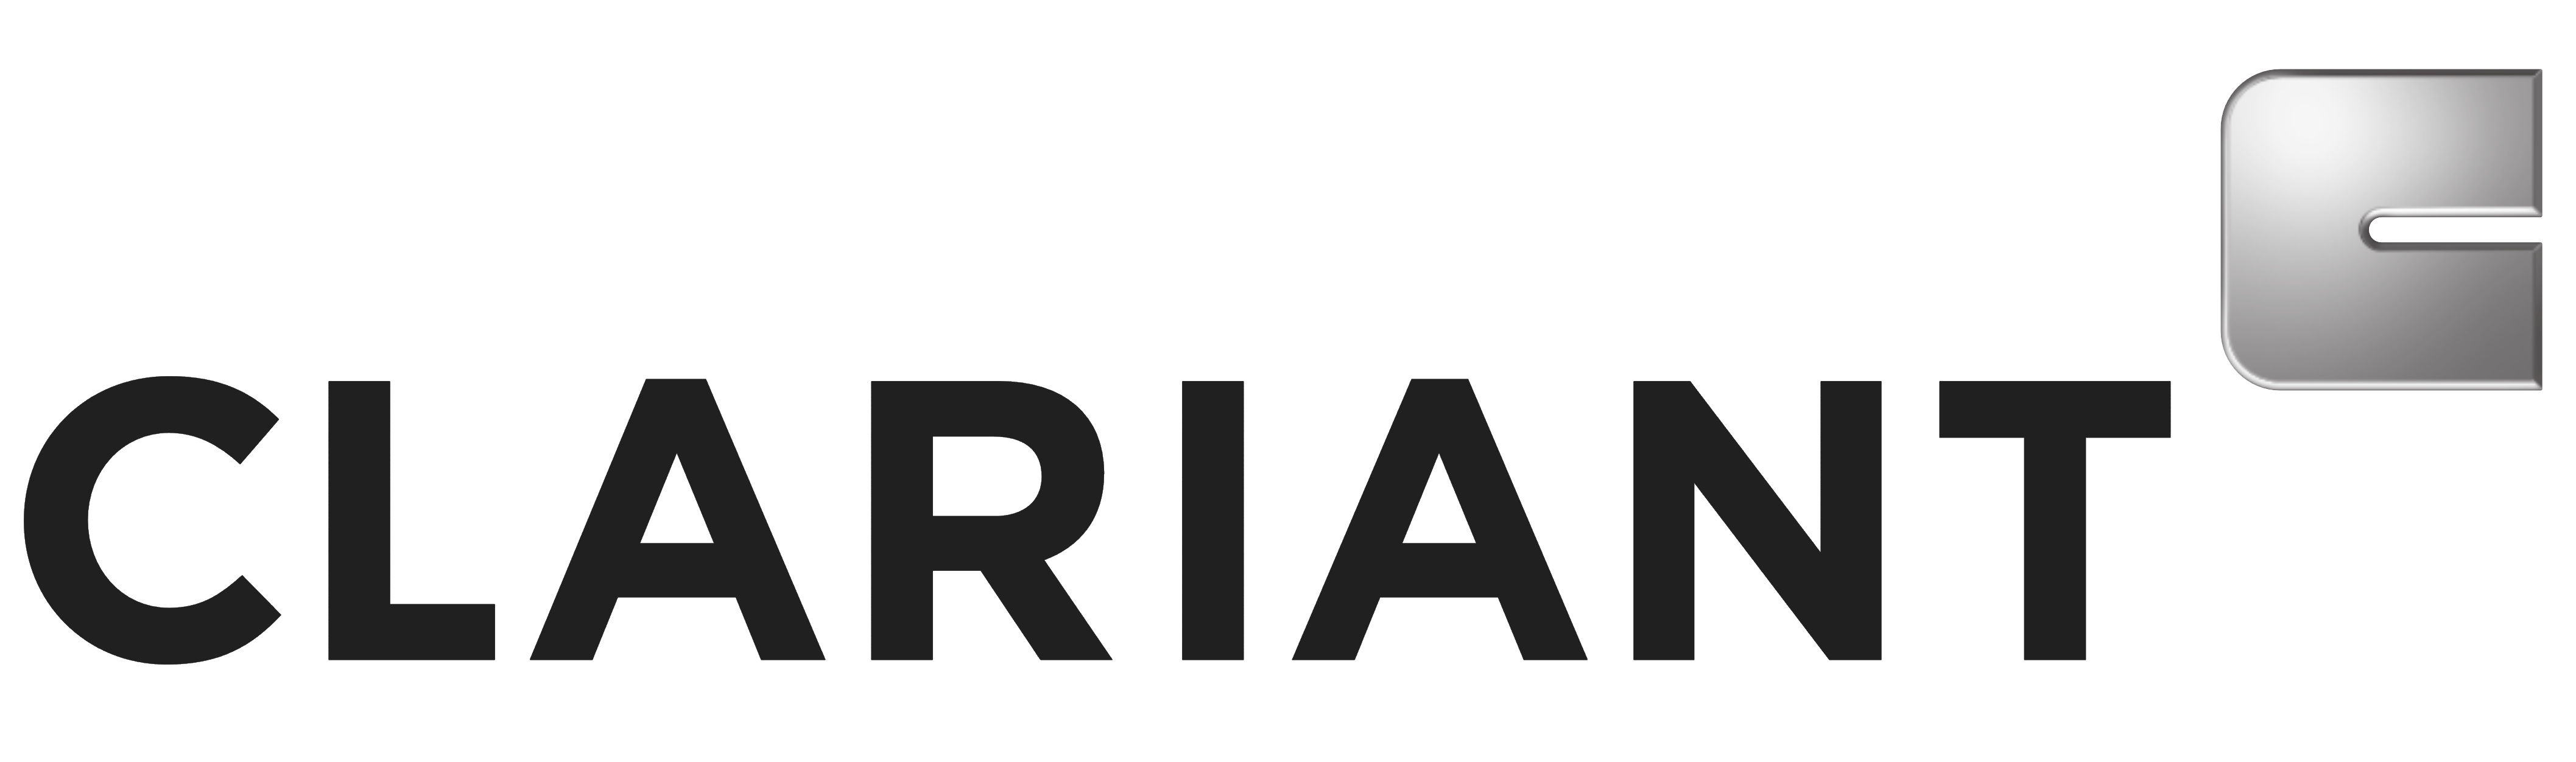 Clariant_logo_logotype